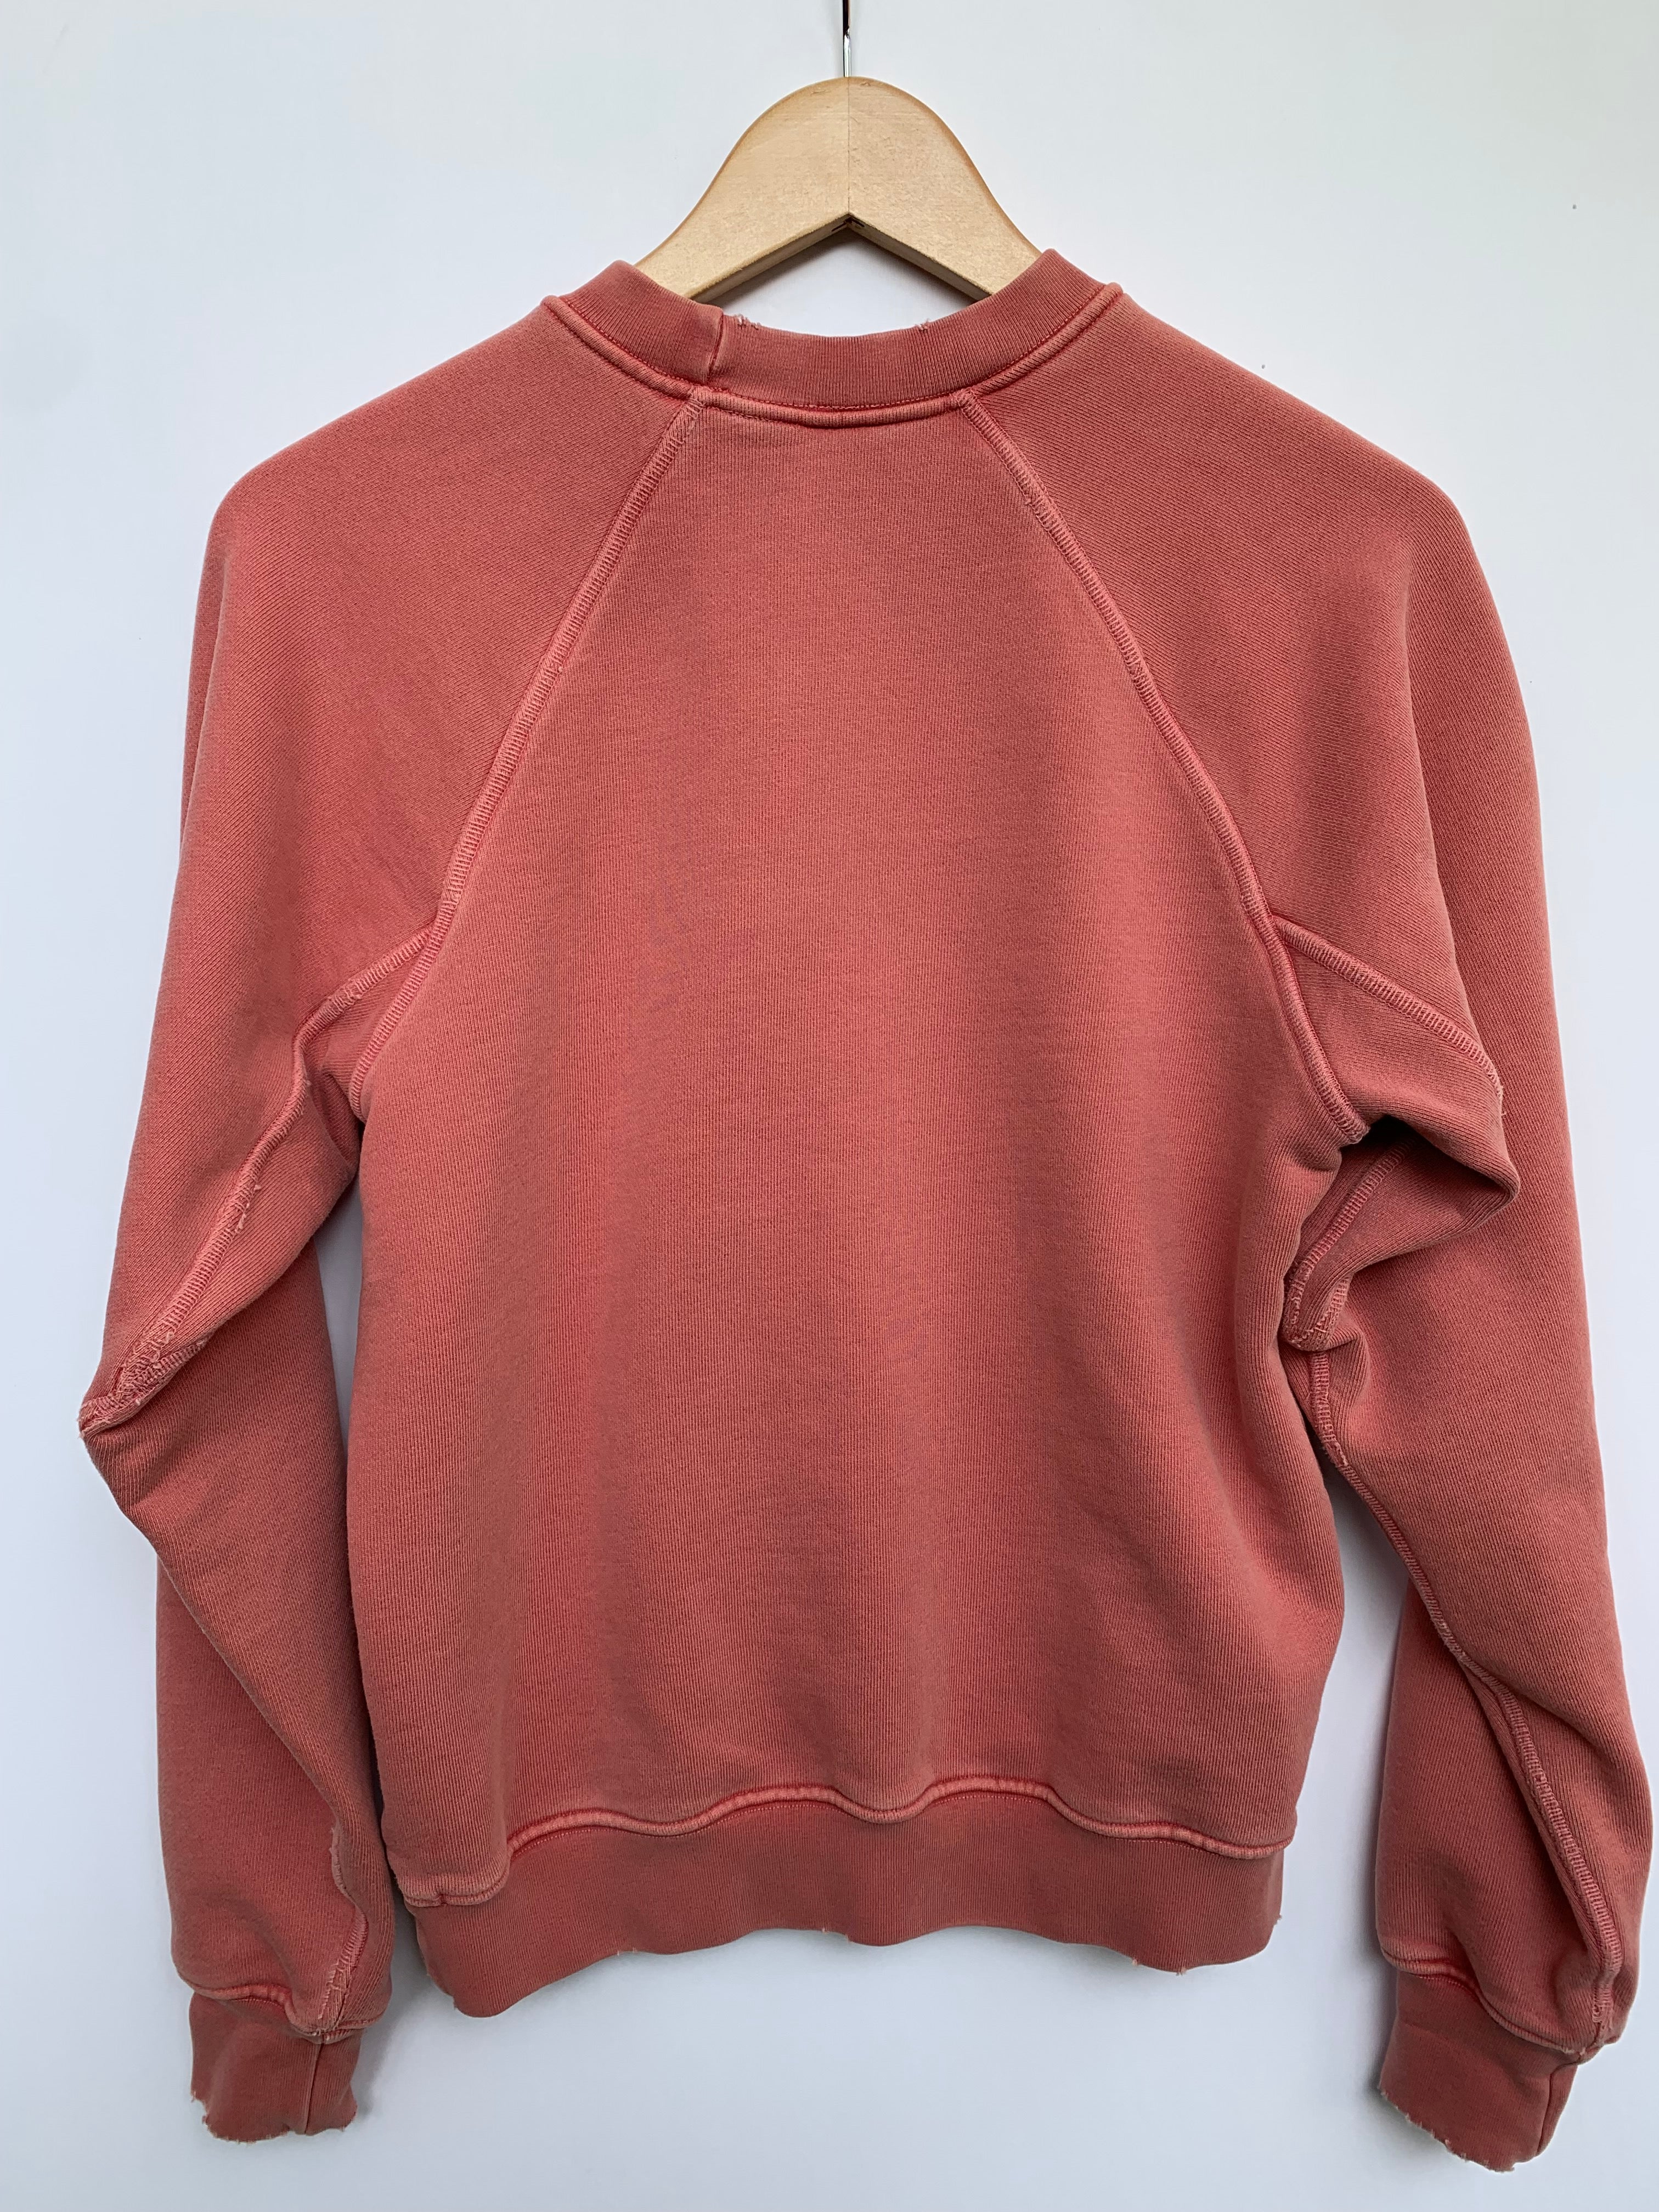 daydream believer sweatshirt in vintage red